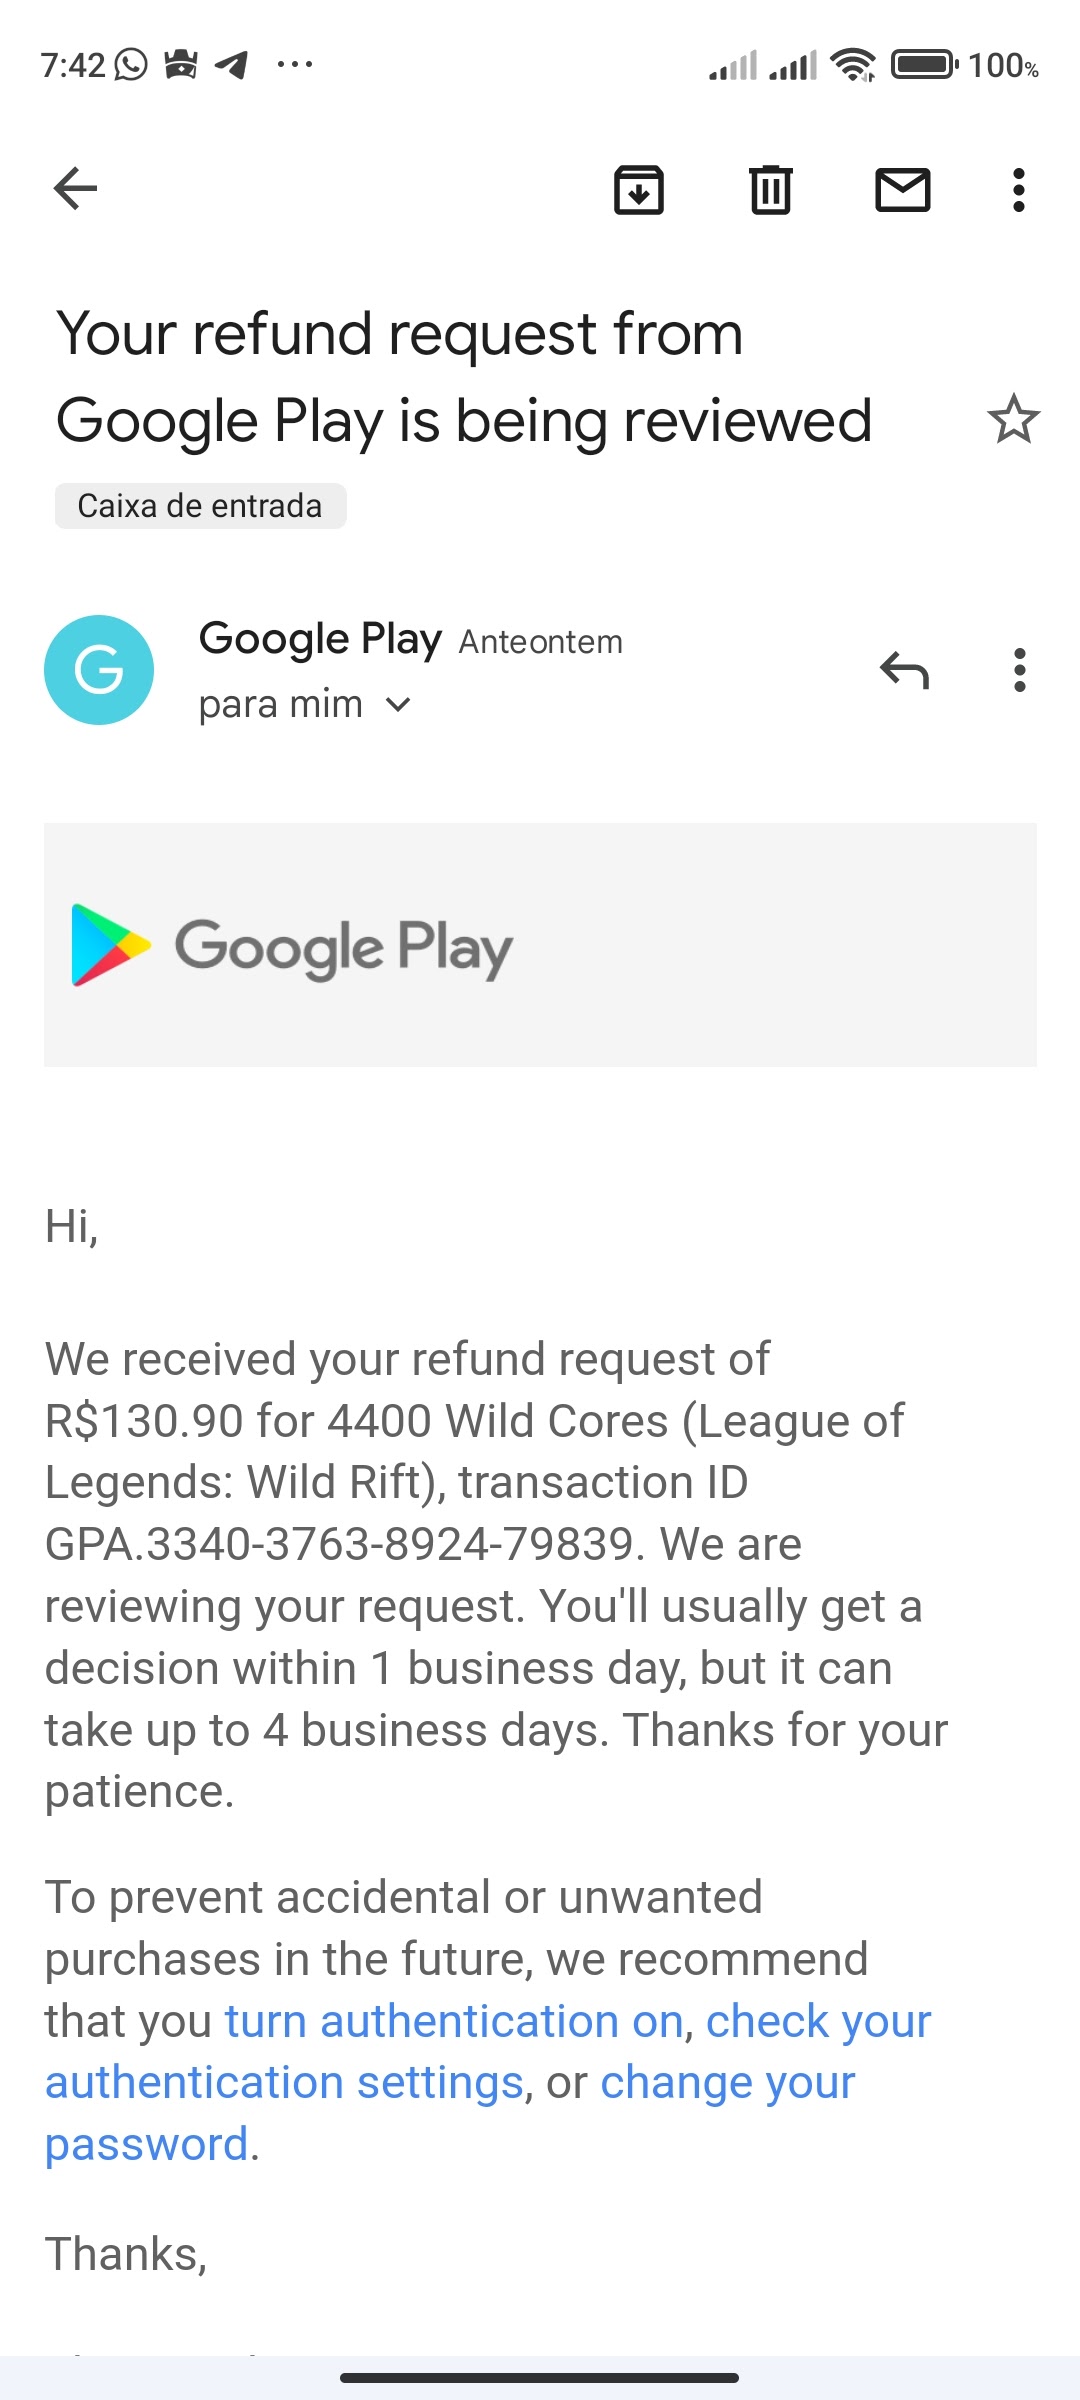 Oq fazer se o pedido de reembolso foi cancelado? - Comunidade Google Play